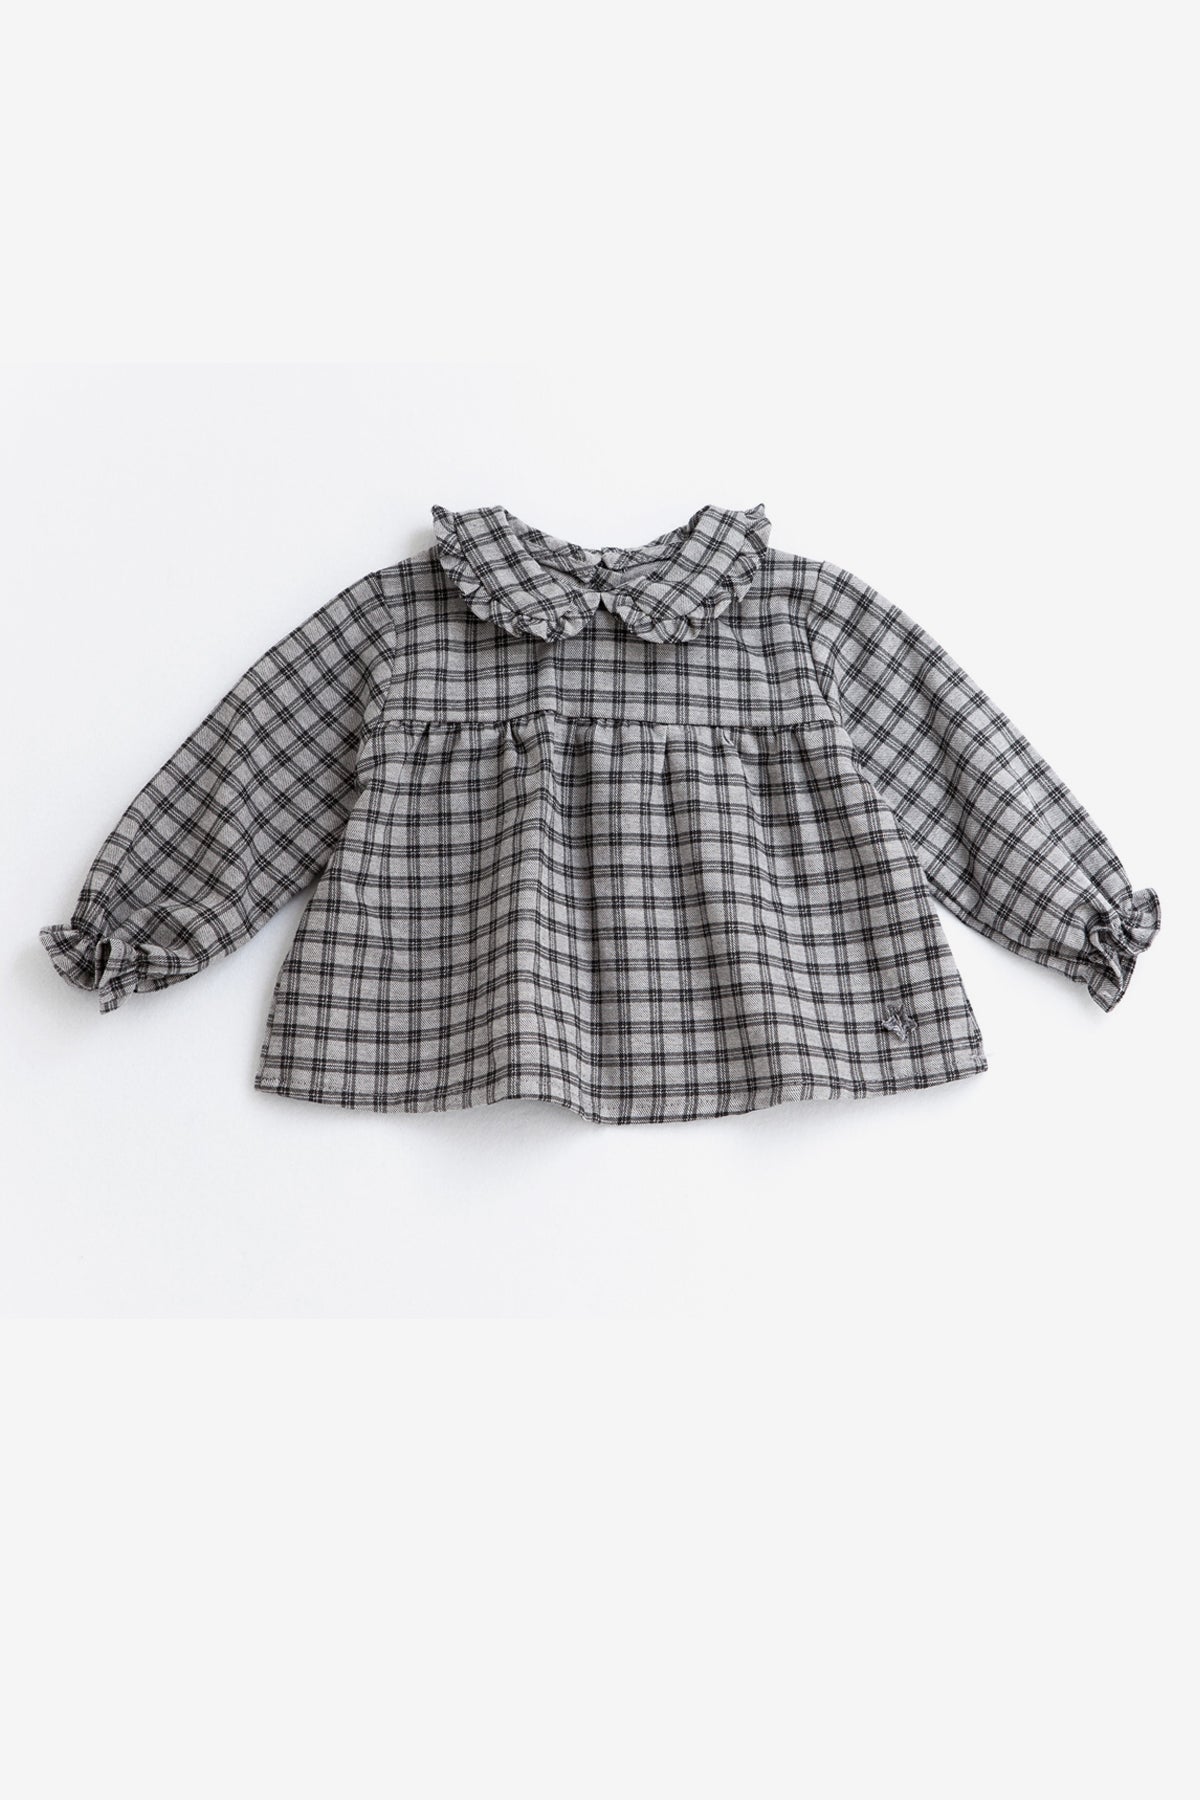 Tocoto Vintage Baby Girls Checkered Shirt - Mini Ruby